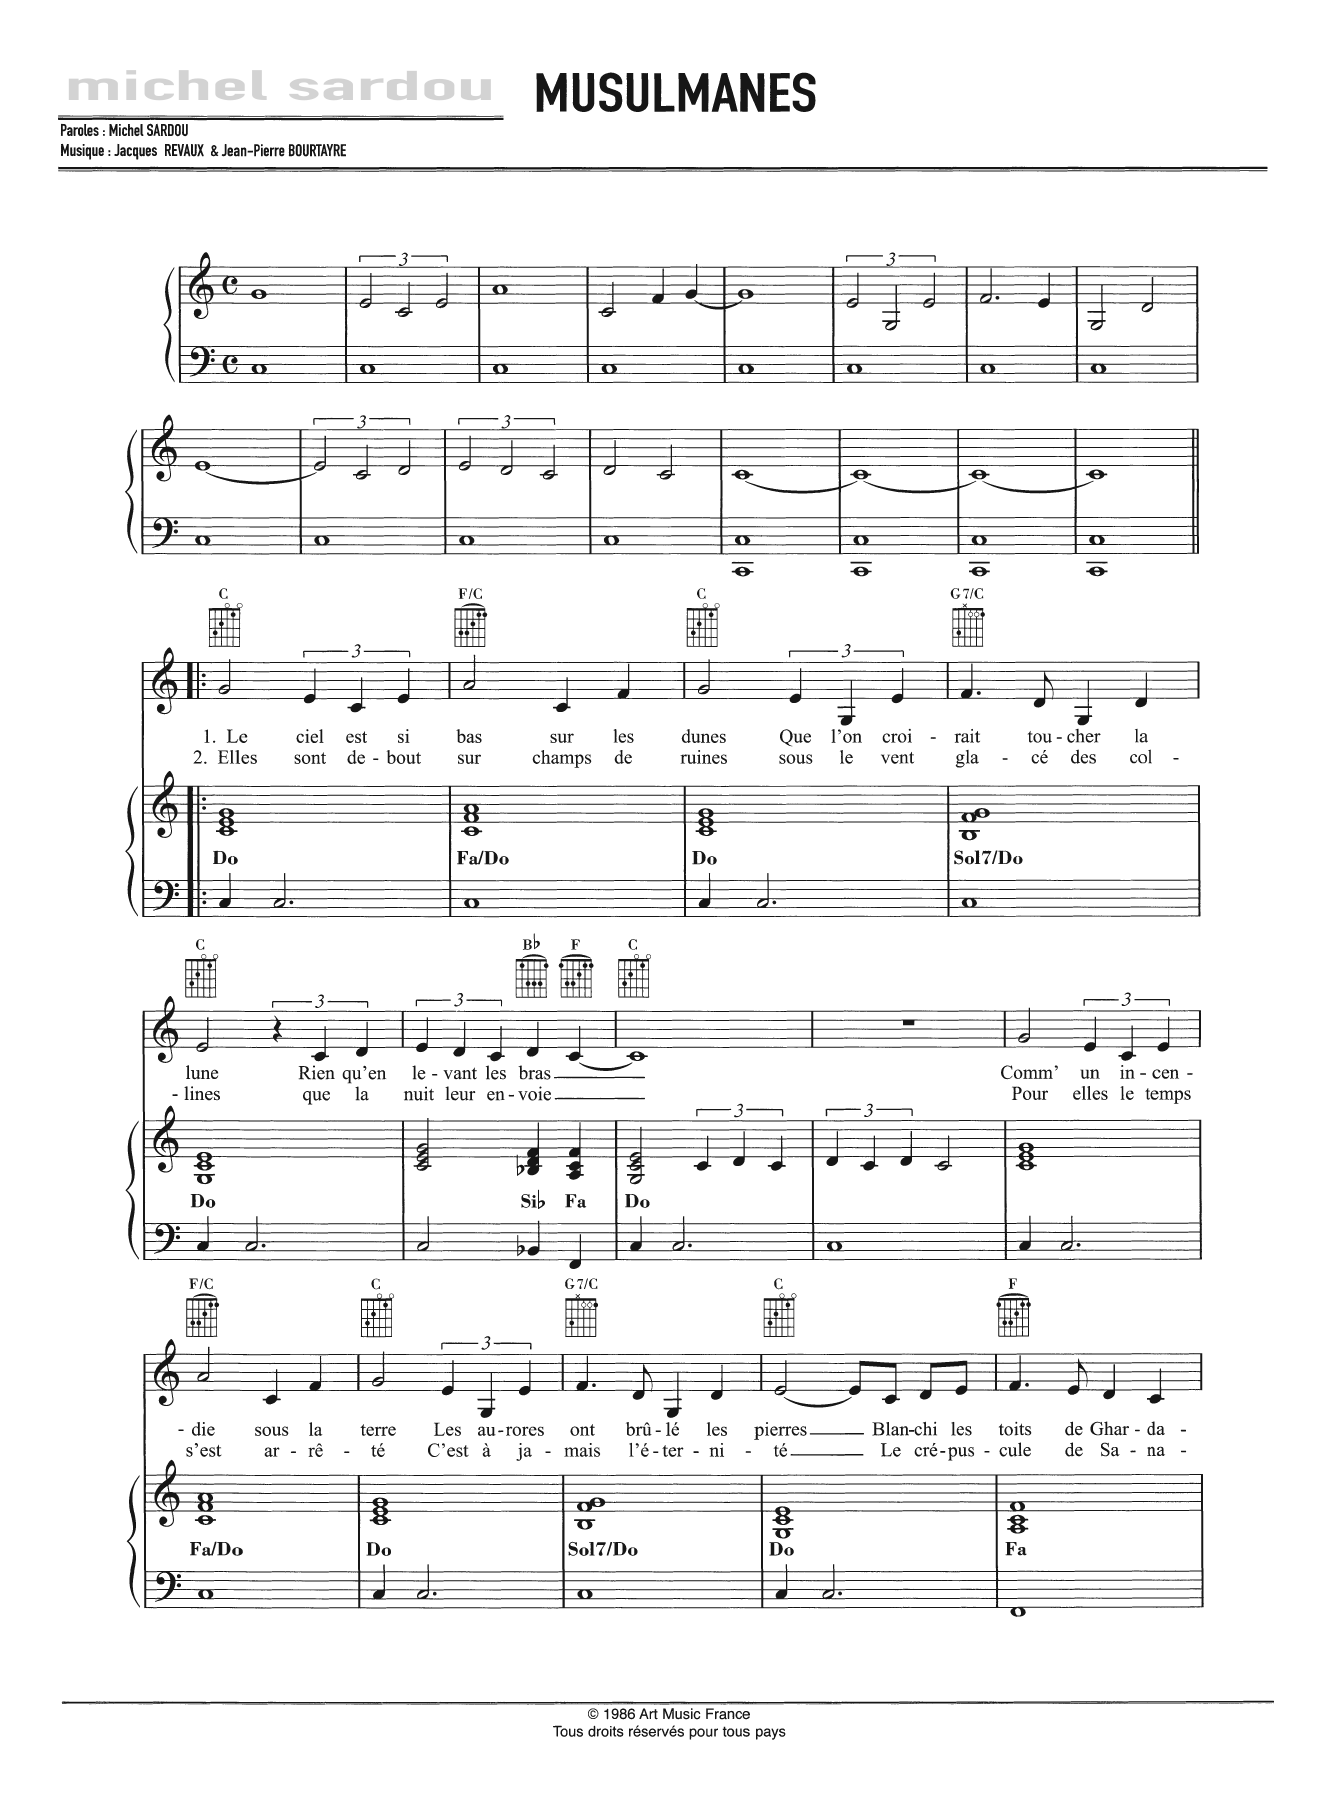 Michel Sardou Musulmanes Sheet Music Notes & Chords for Piano, Vocal & Guitar - Download or Print PDF